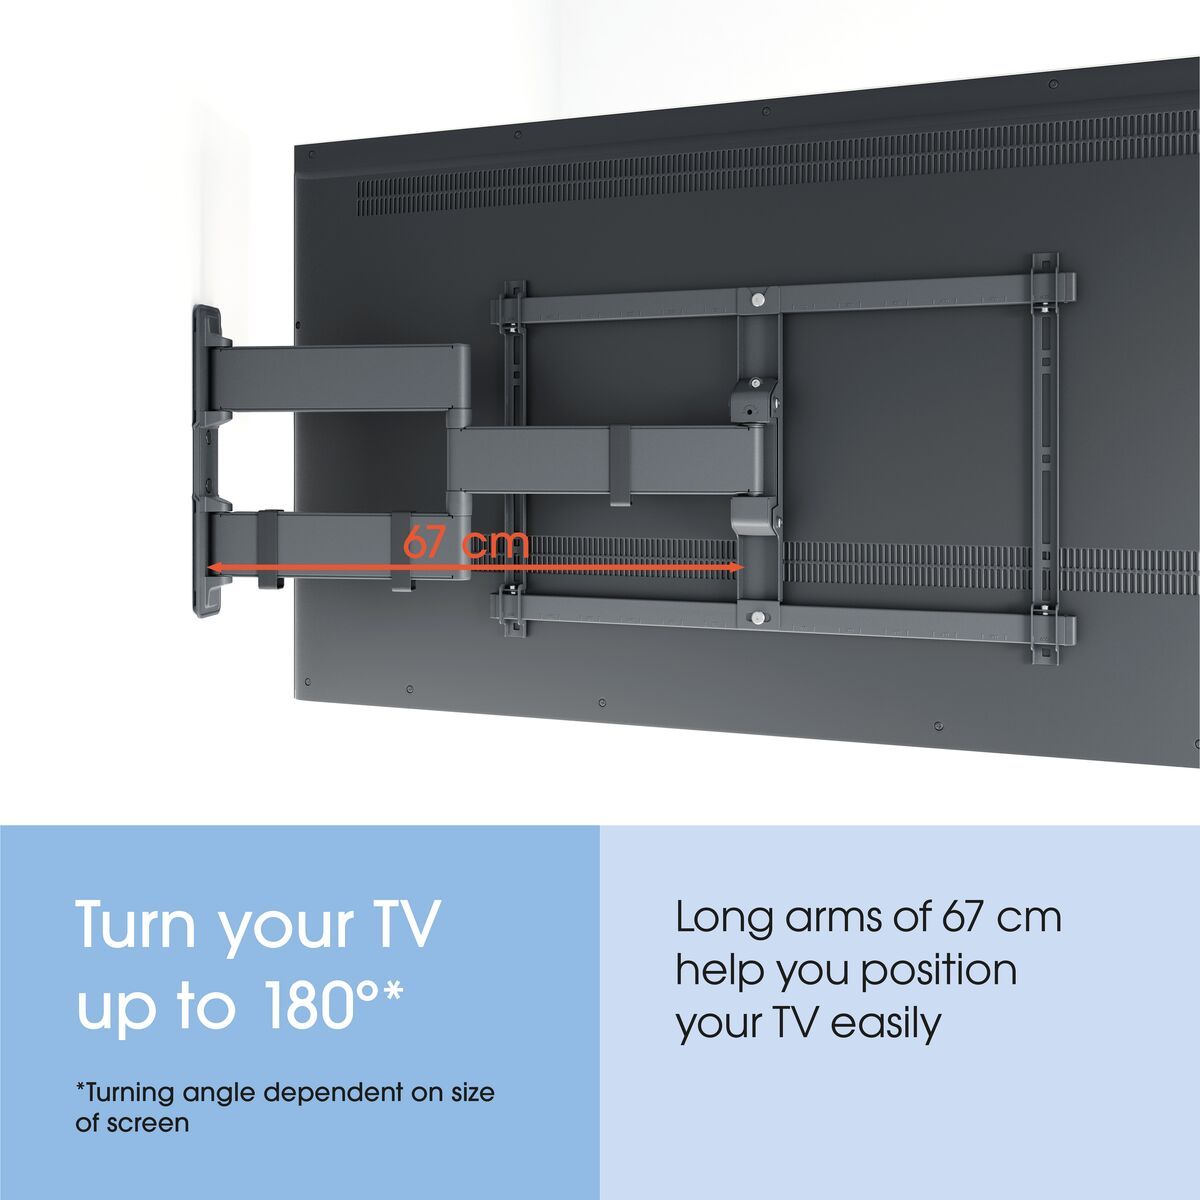 Vogel's TVM 3845 Full-Motion TV Wall Mount (black) - Suitable for 55 up to 100 inch TVs - Full motion (up to 180°) swivel - Tilt up to 10° - USP